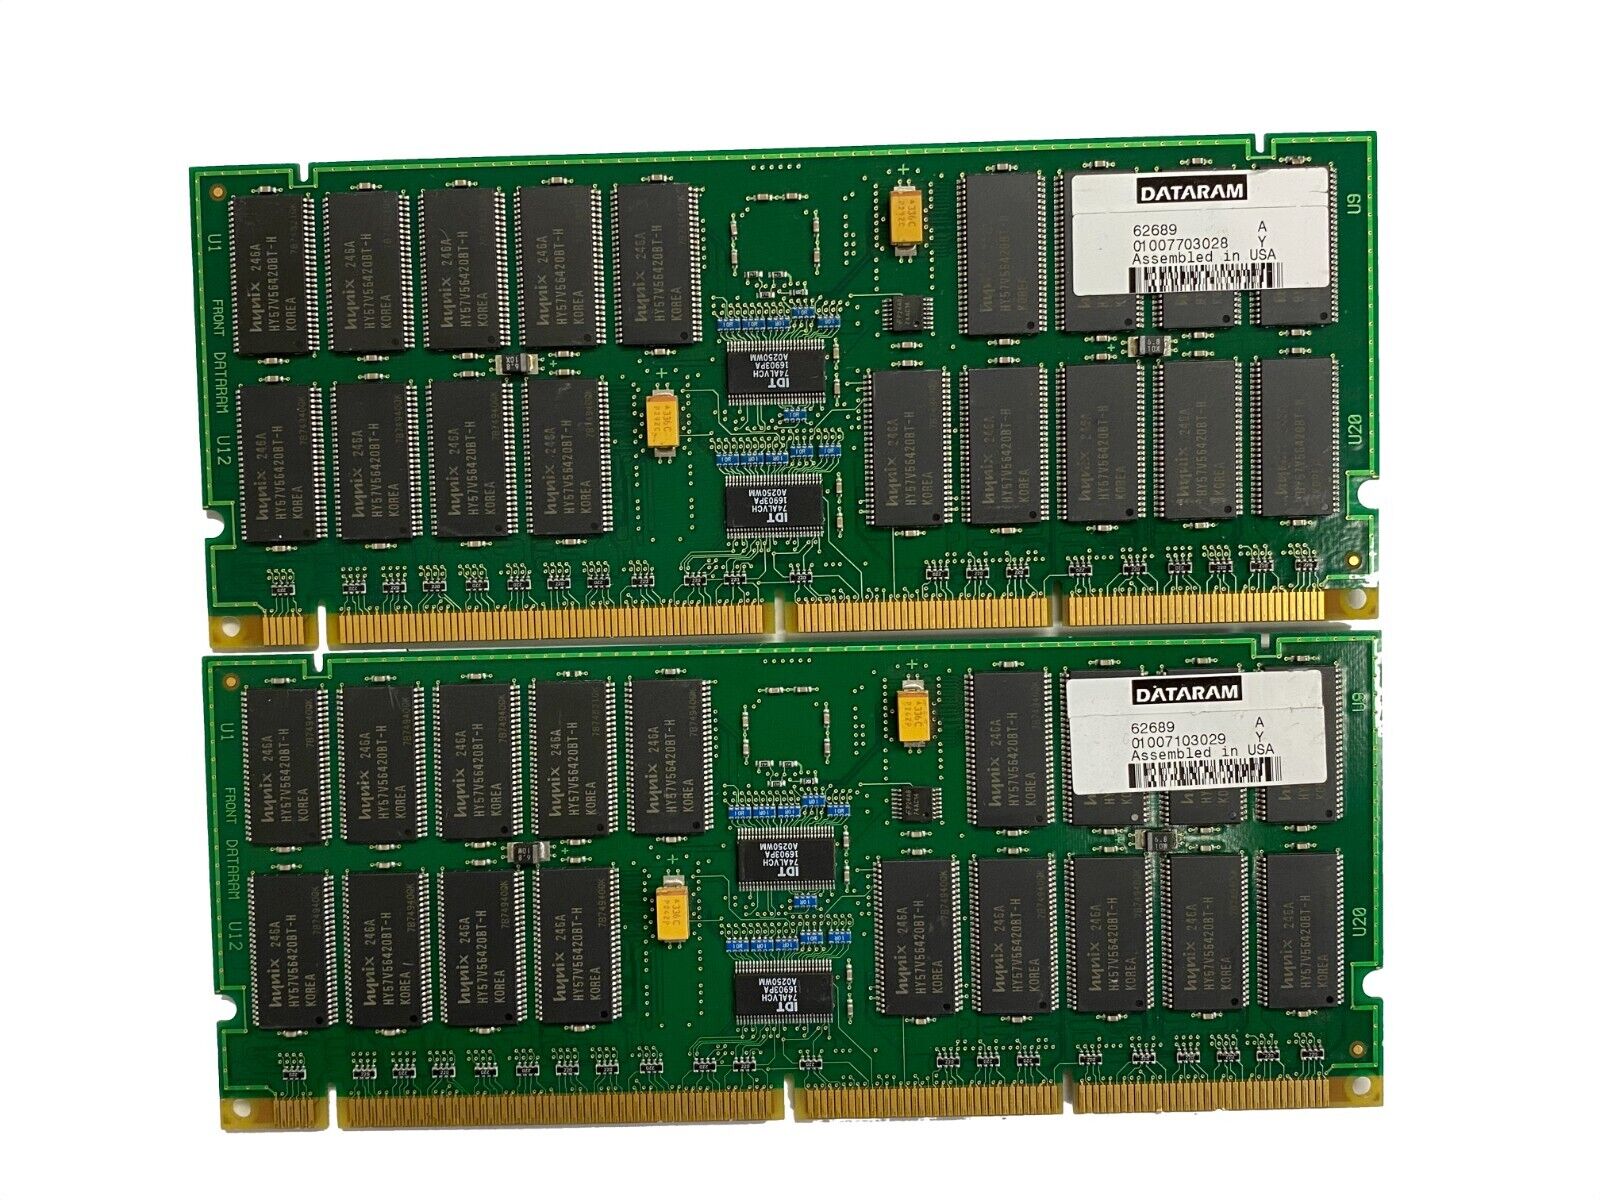 2GB 2 x 1GB SDRAM ECC 278-Pin DIMM Memory for HP 9000 Server Dataram 62689